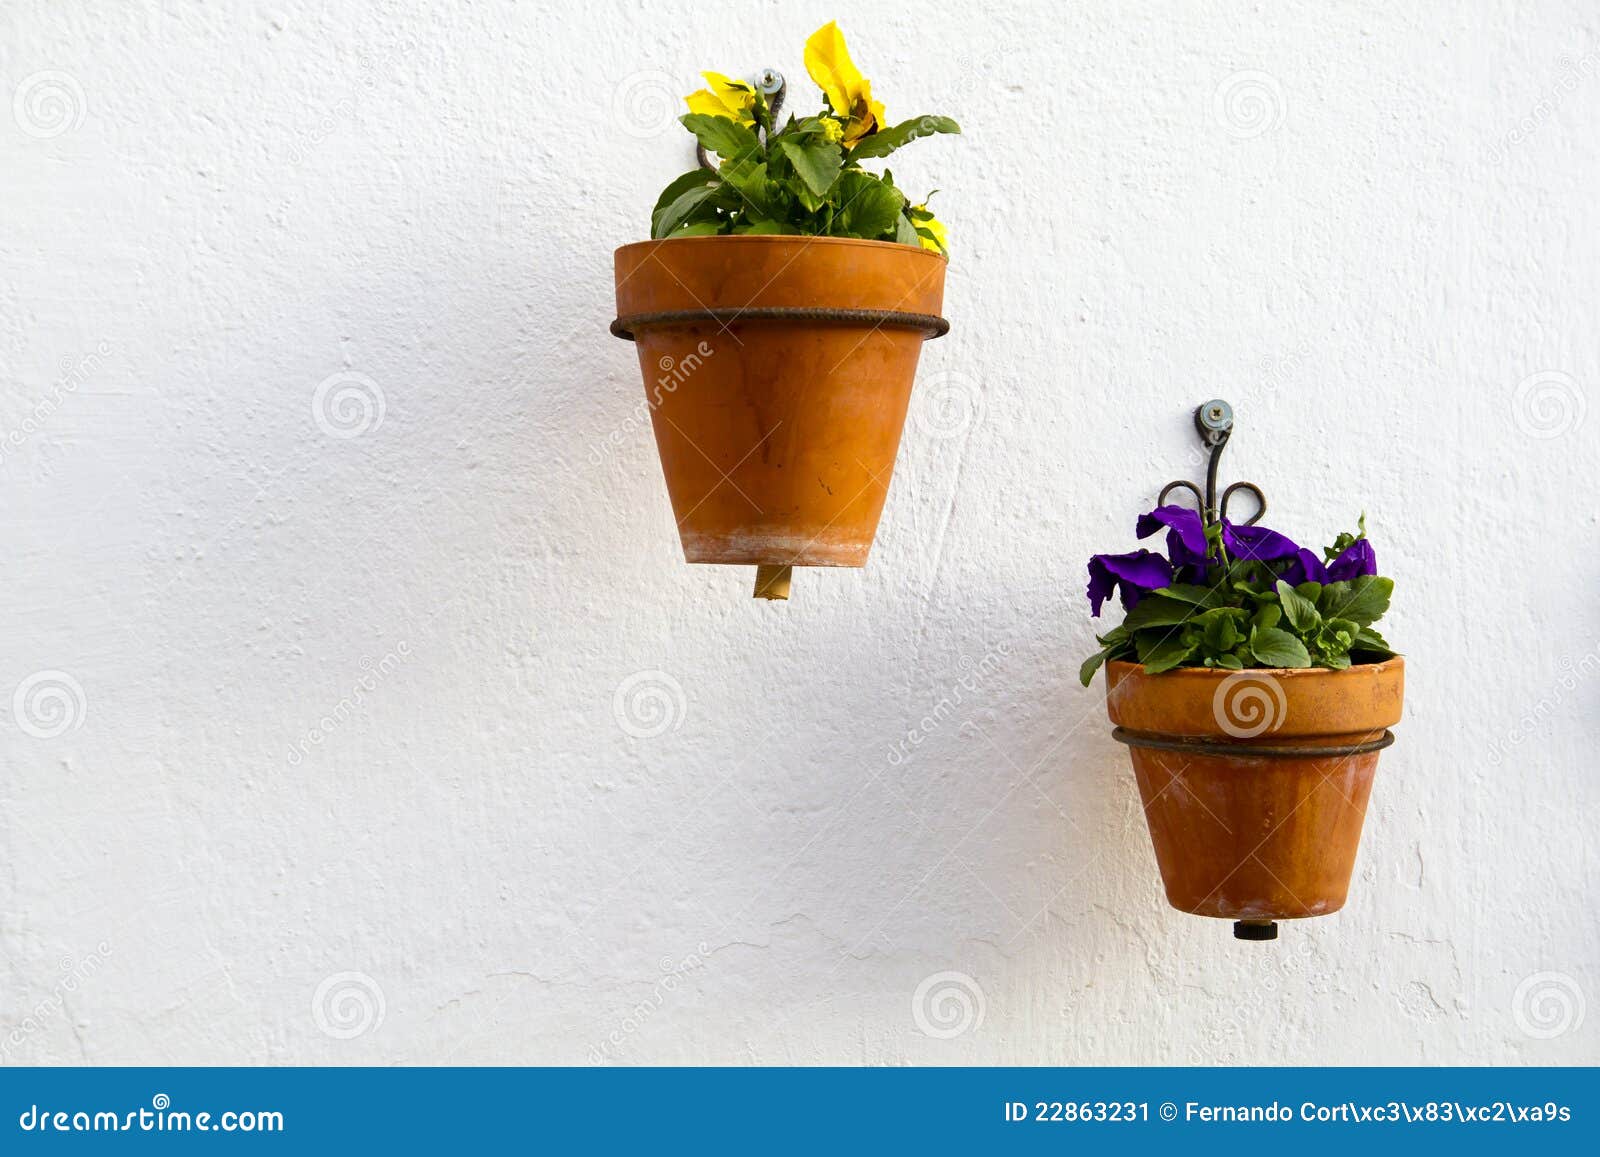 spanish wall with beautiful plants.